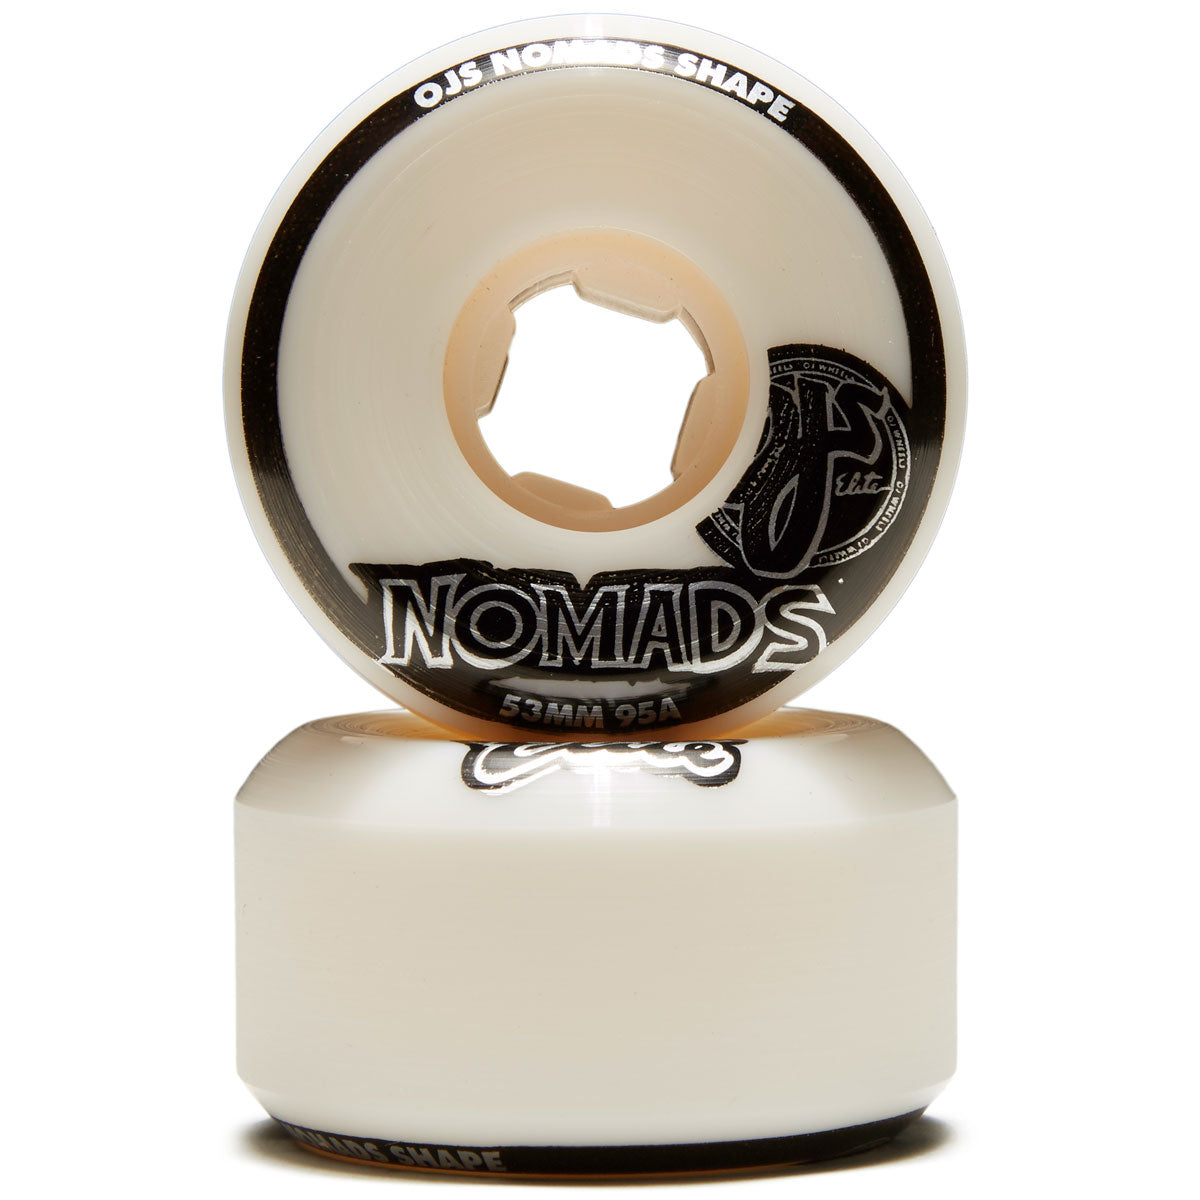 OJ Elite Nomads 95a Skateboard Wheels - White - 53mm image 2